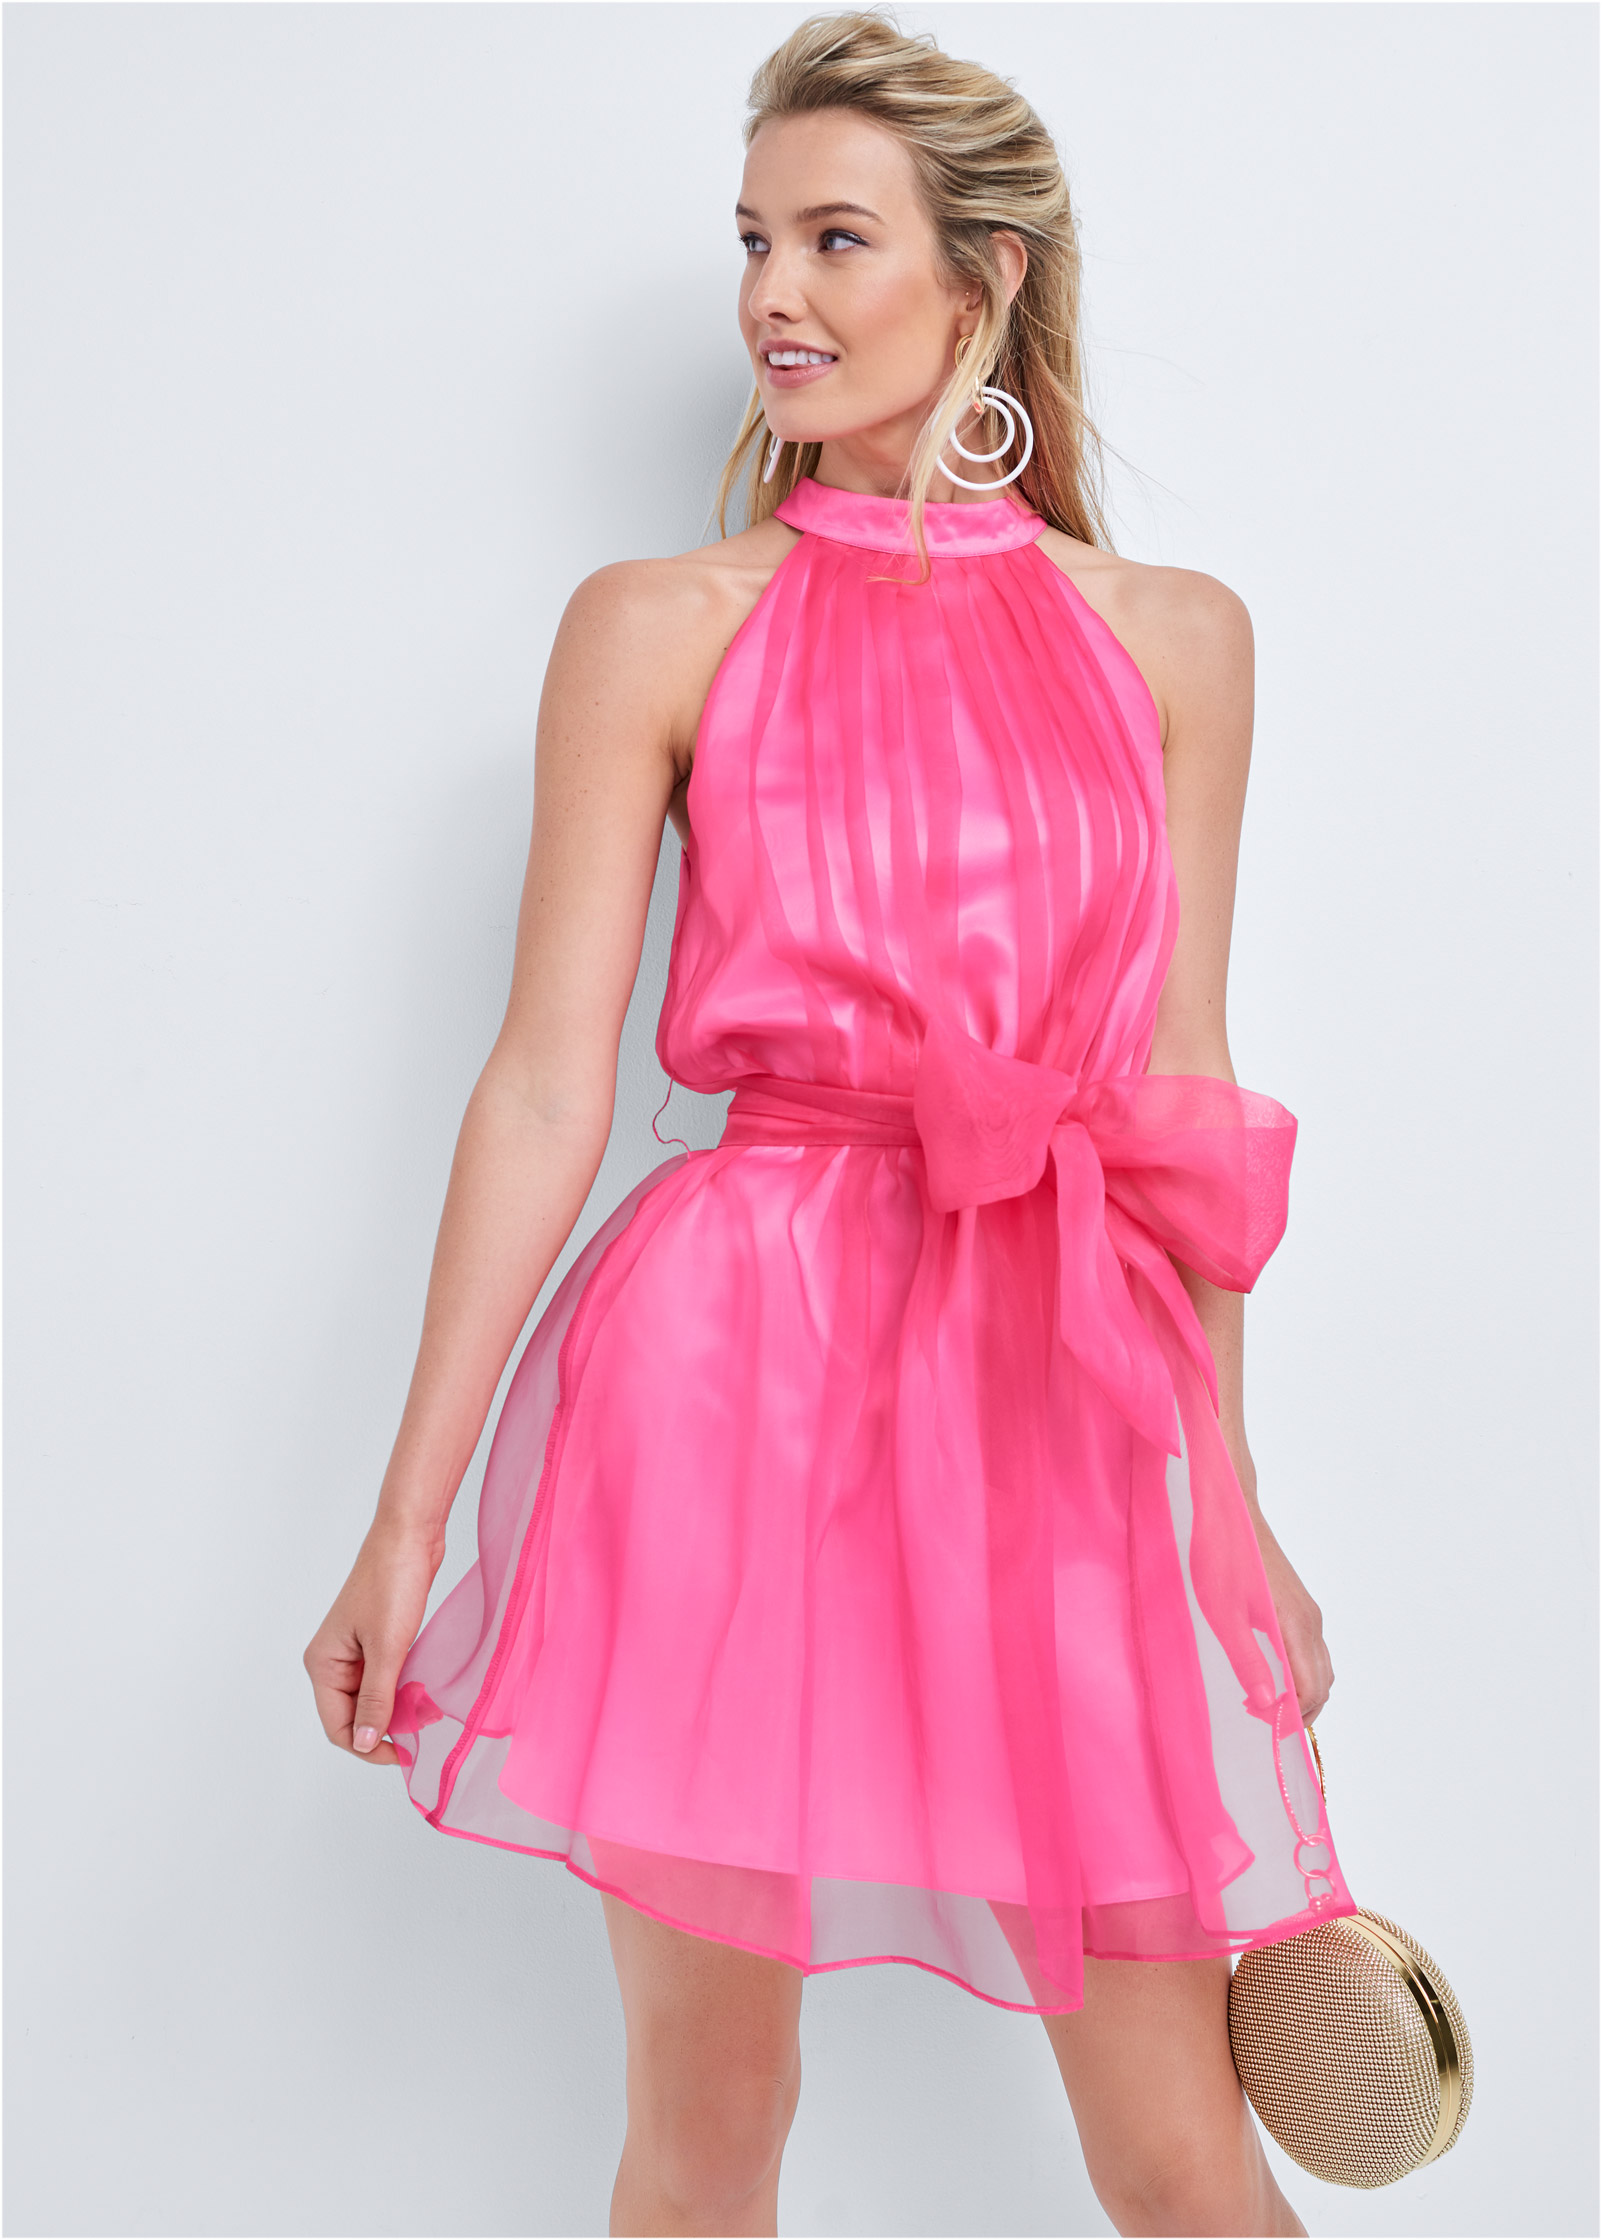 pink organza dress